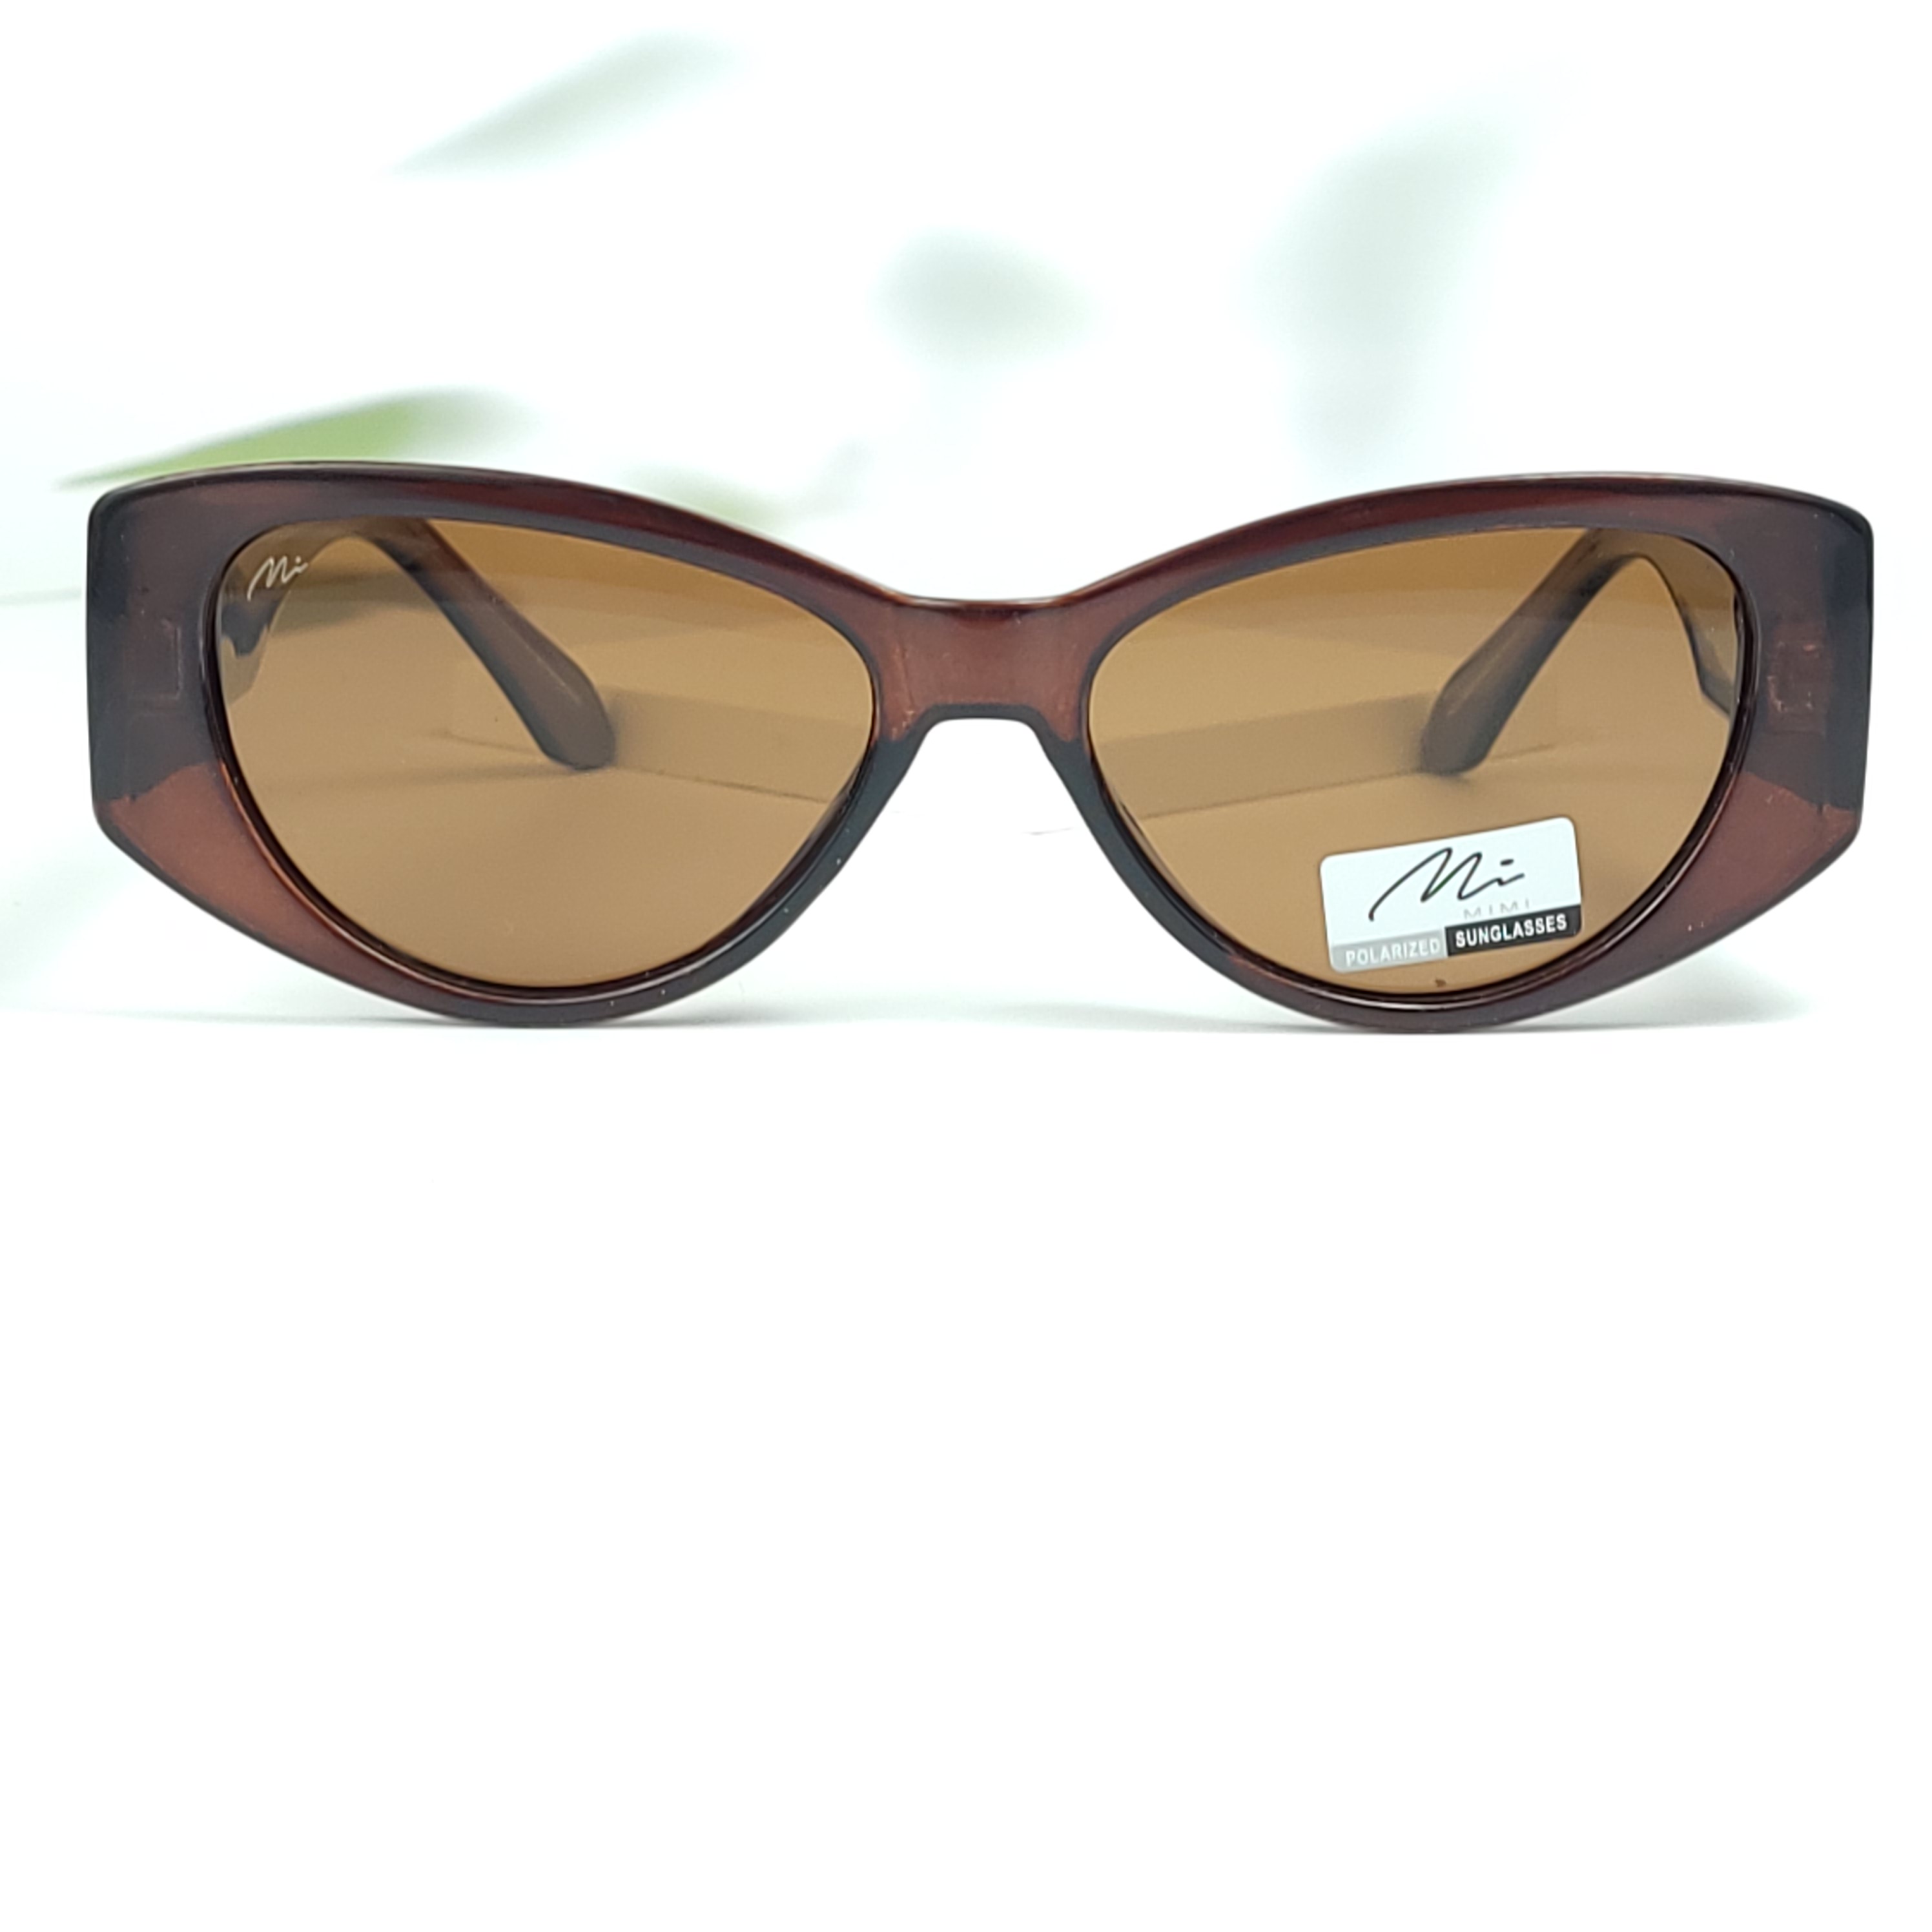 Mimi brown oval polarized sunglasses for women ( gg0018 mi852g c6 )